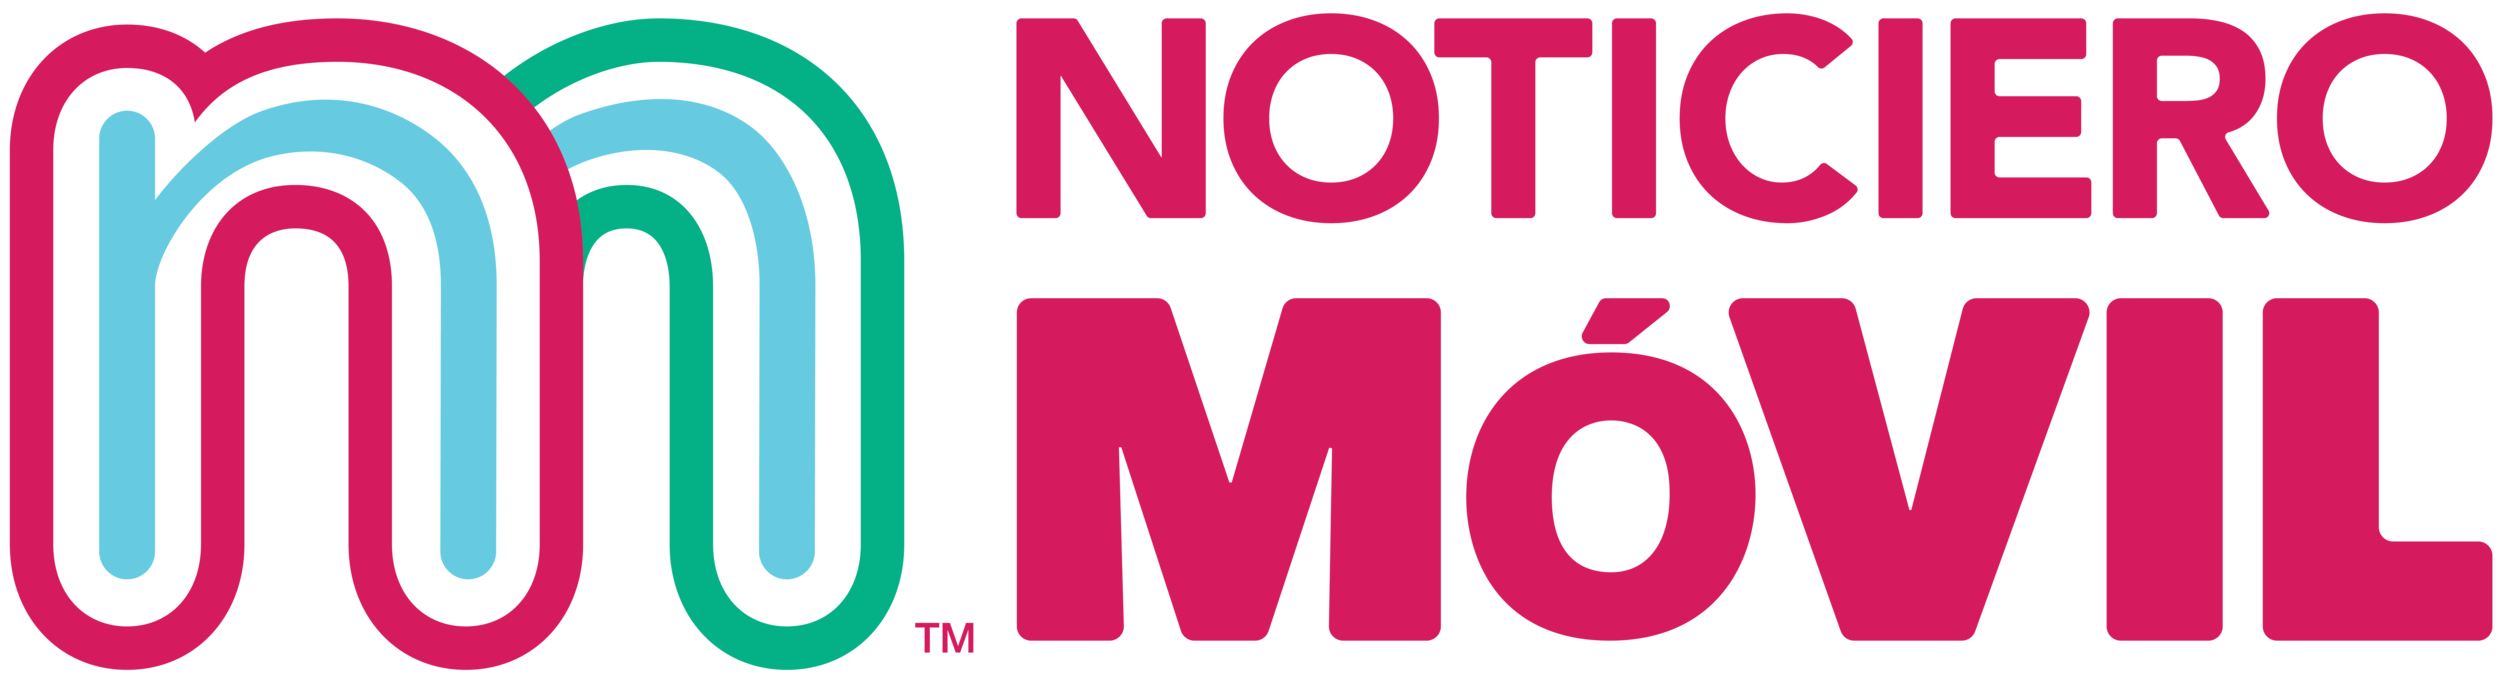 Noticiero-Movil_Horizontal-Logo-V1.png